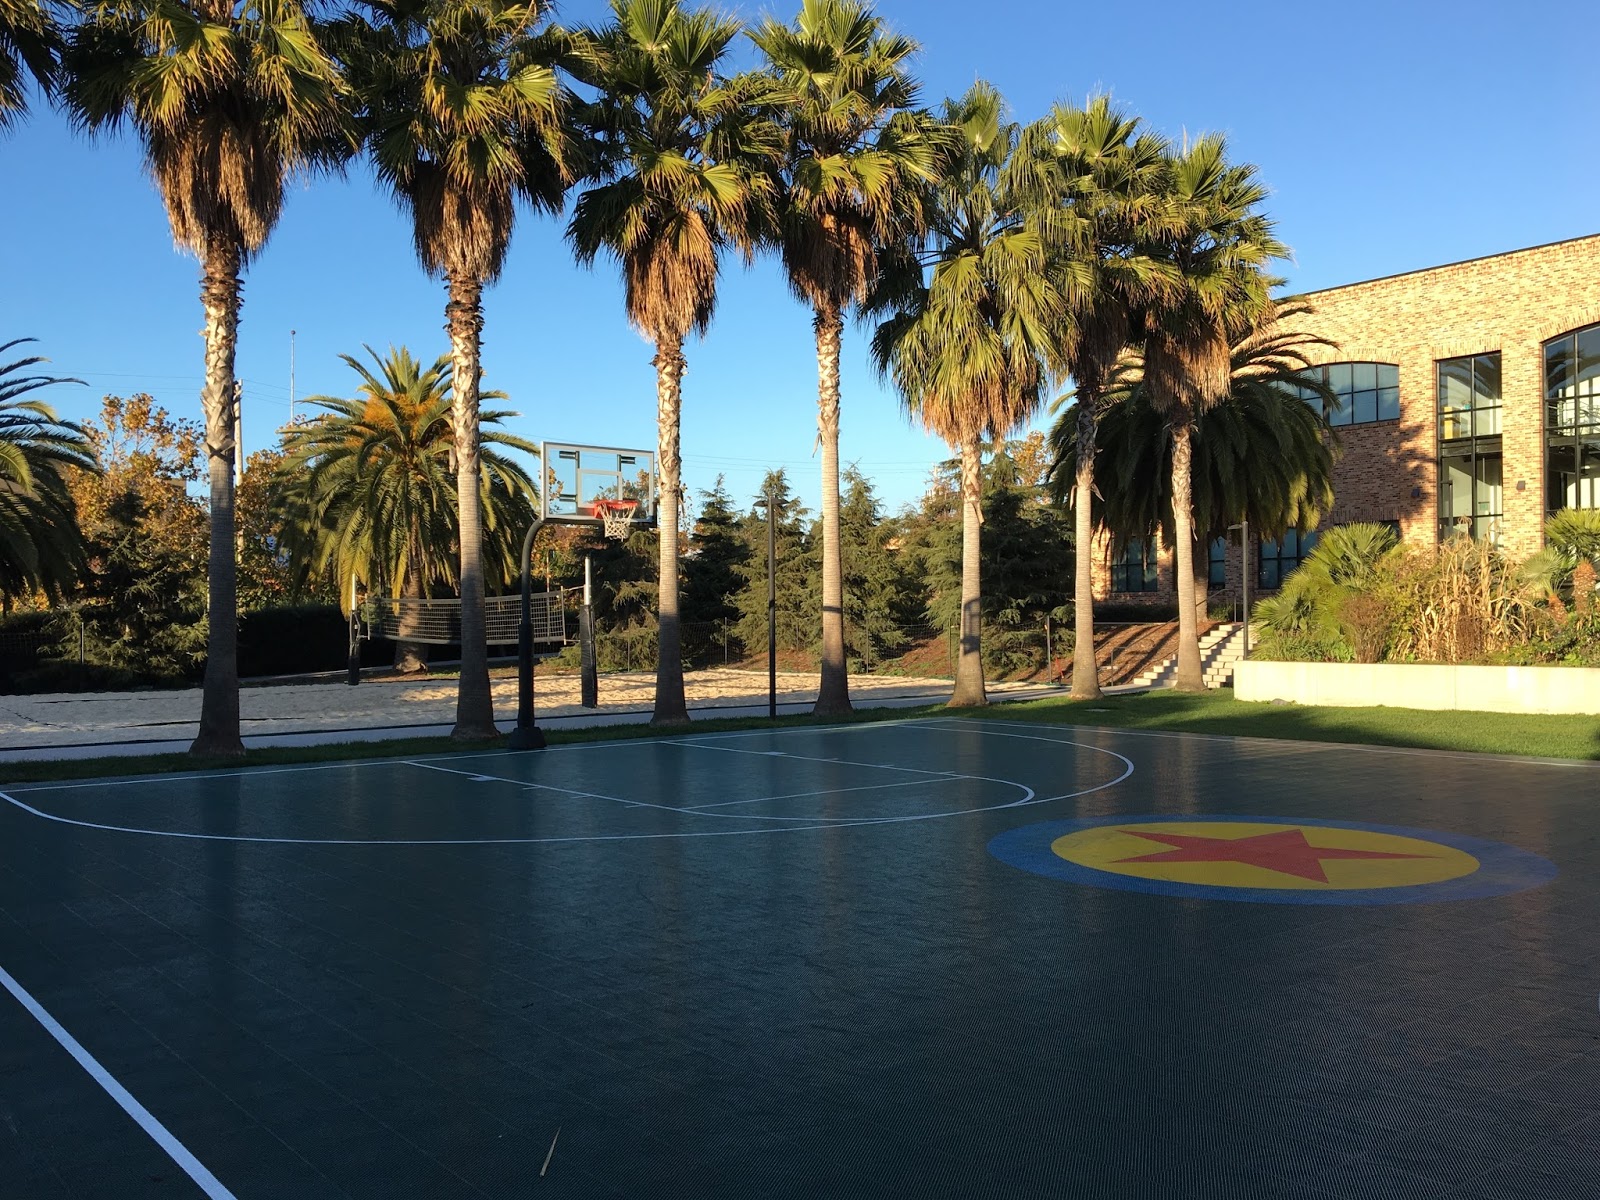 pixar studios basketball court